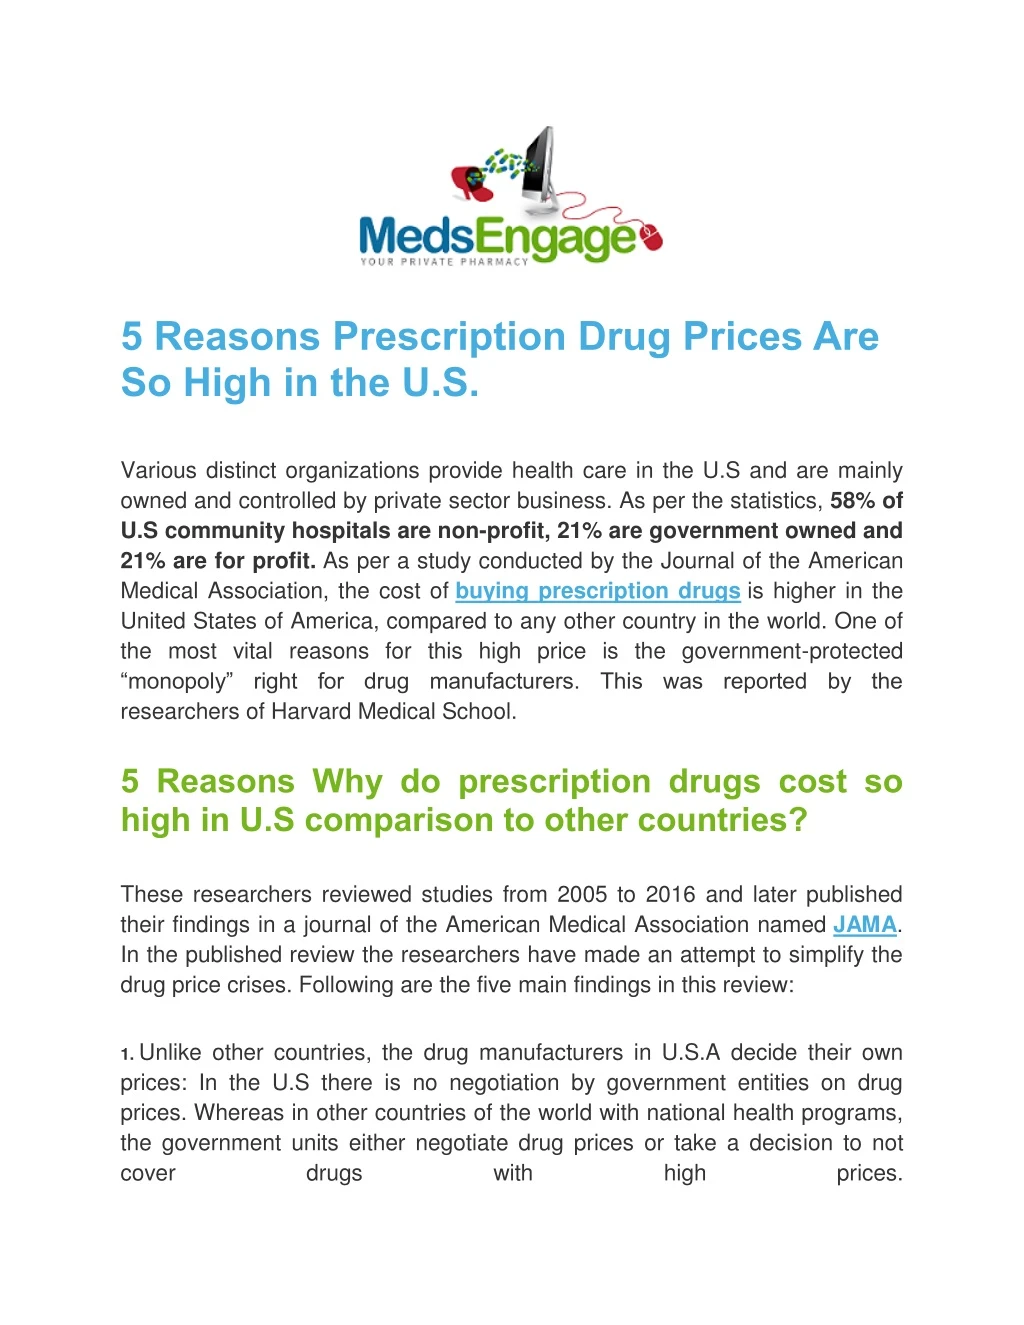 5 reasons prescription drug prices are so high